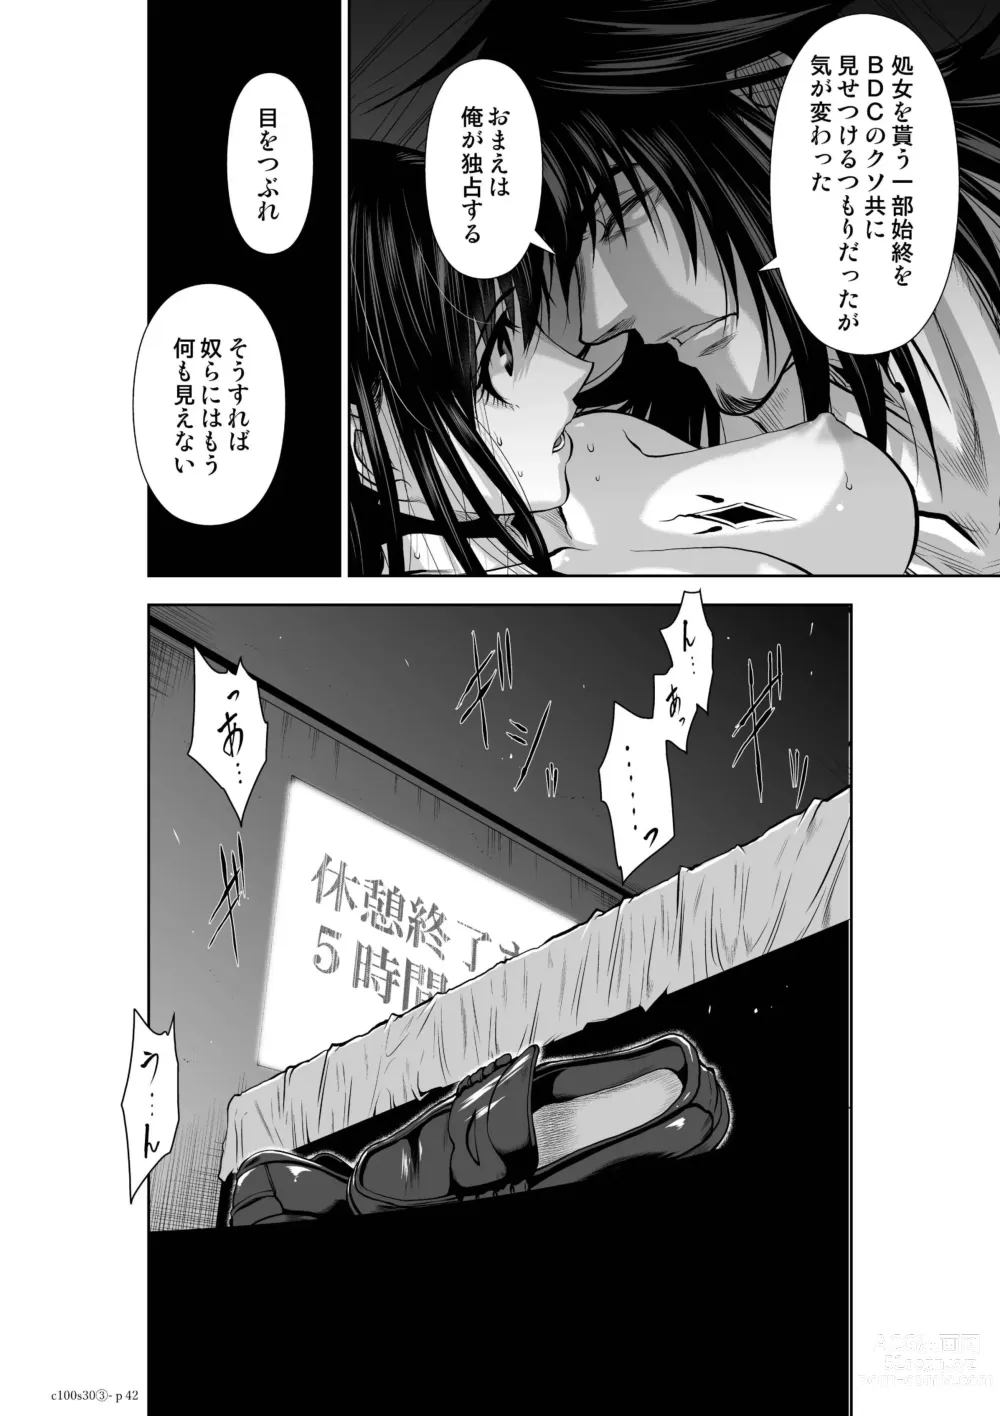 Page 1283 of manga Chijou Hyakkai Ch1-30